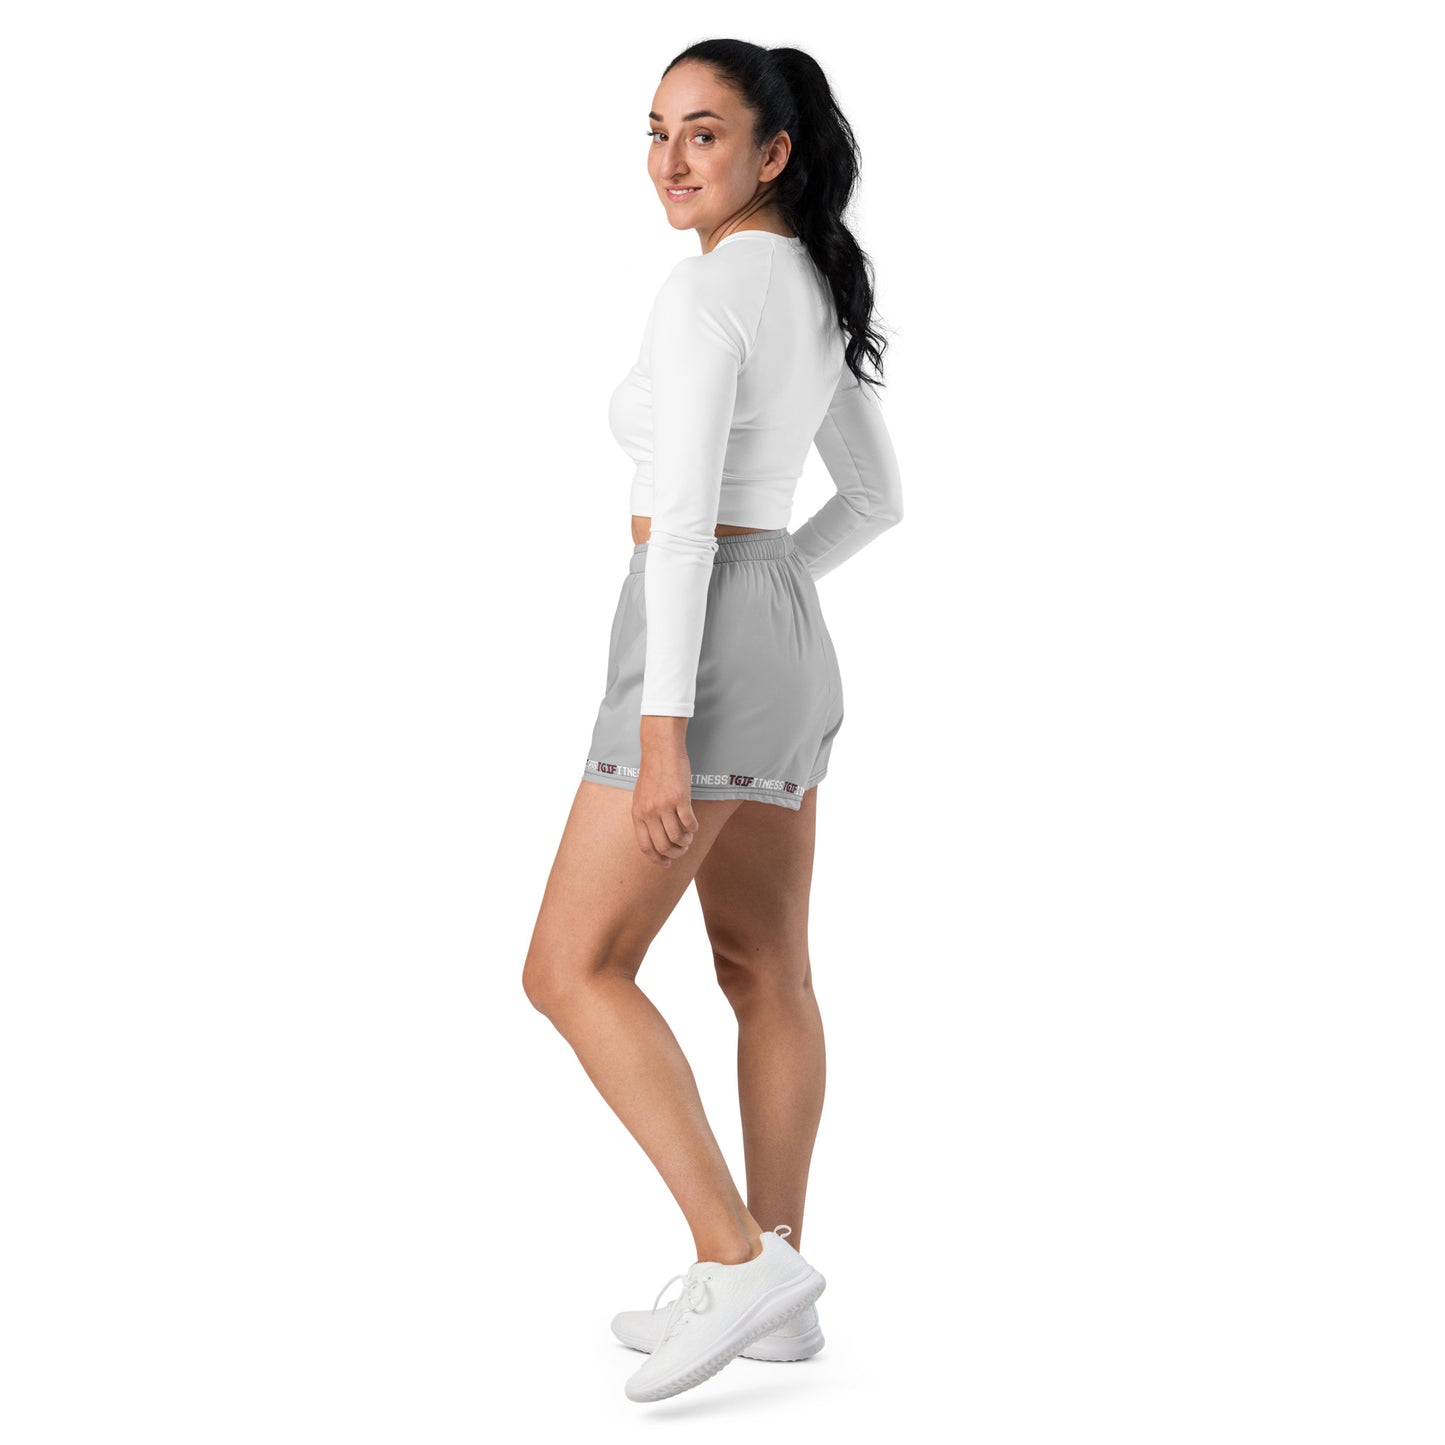 Women’s Athletic Shorts (Light Grey)